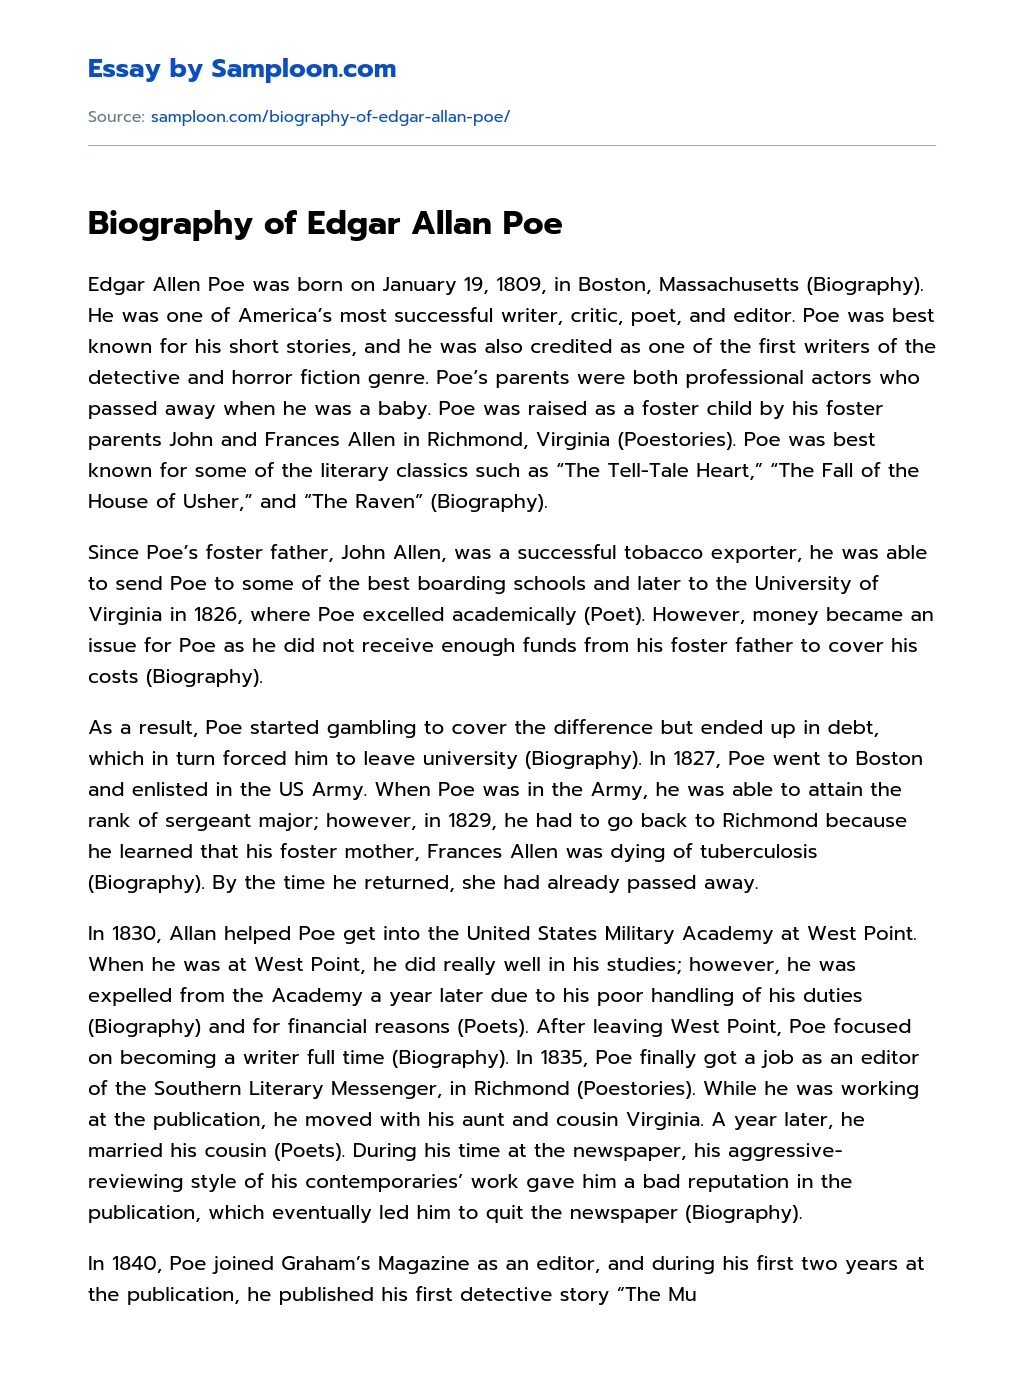 Biography of Edgar Allan Poe essay